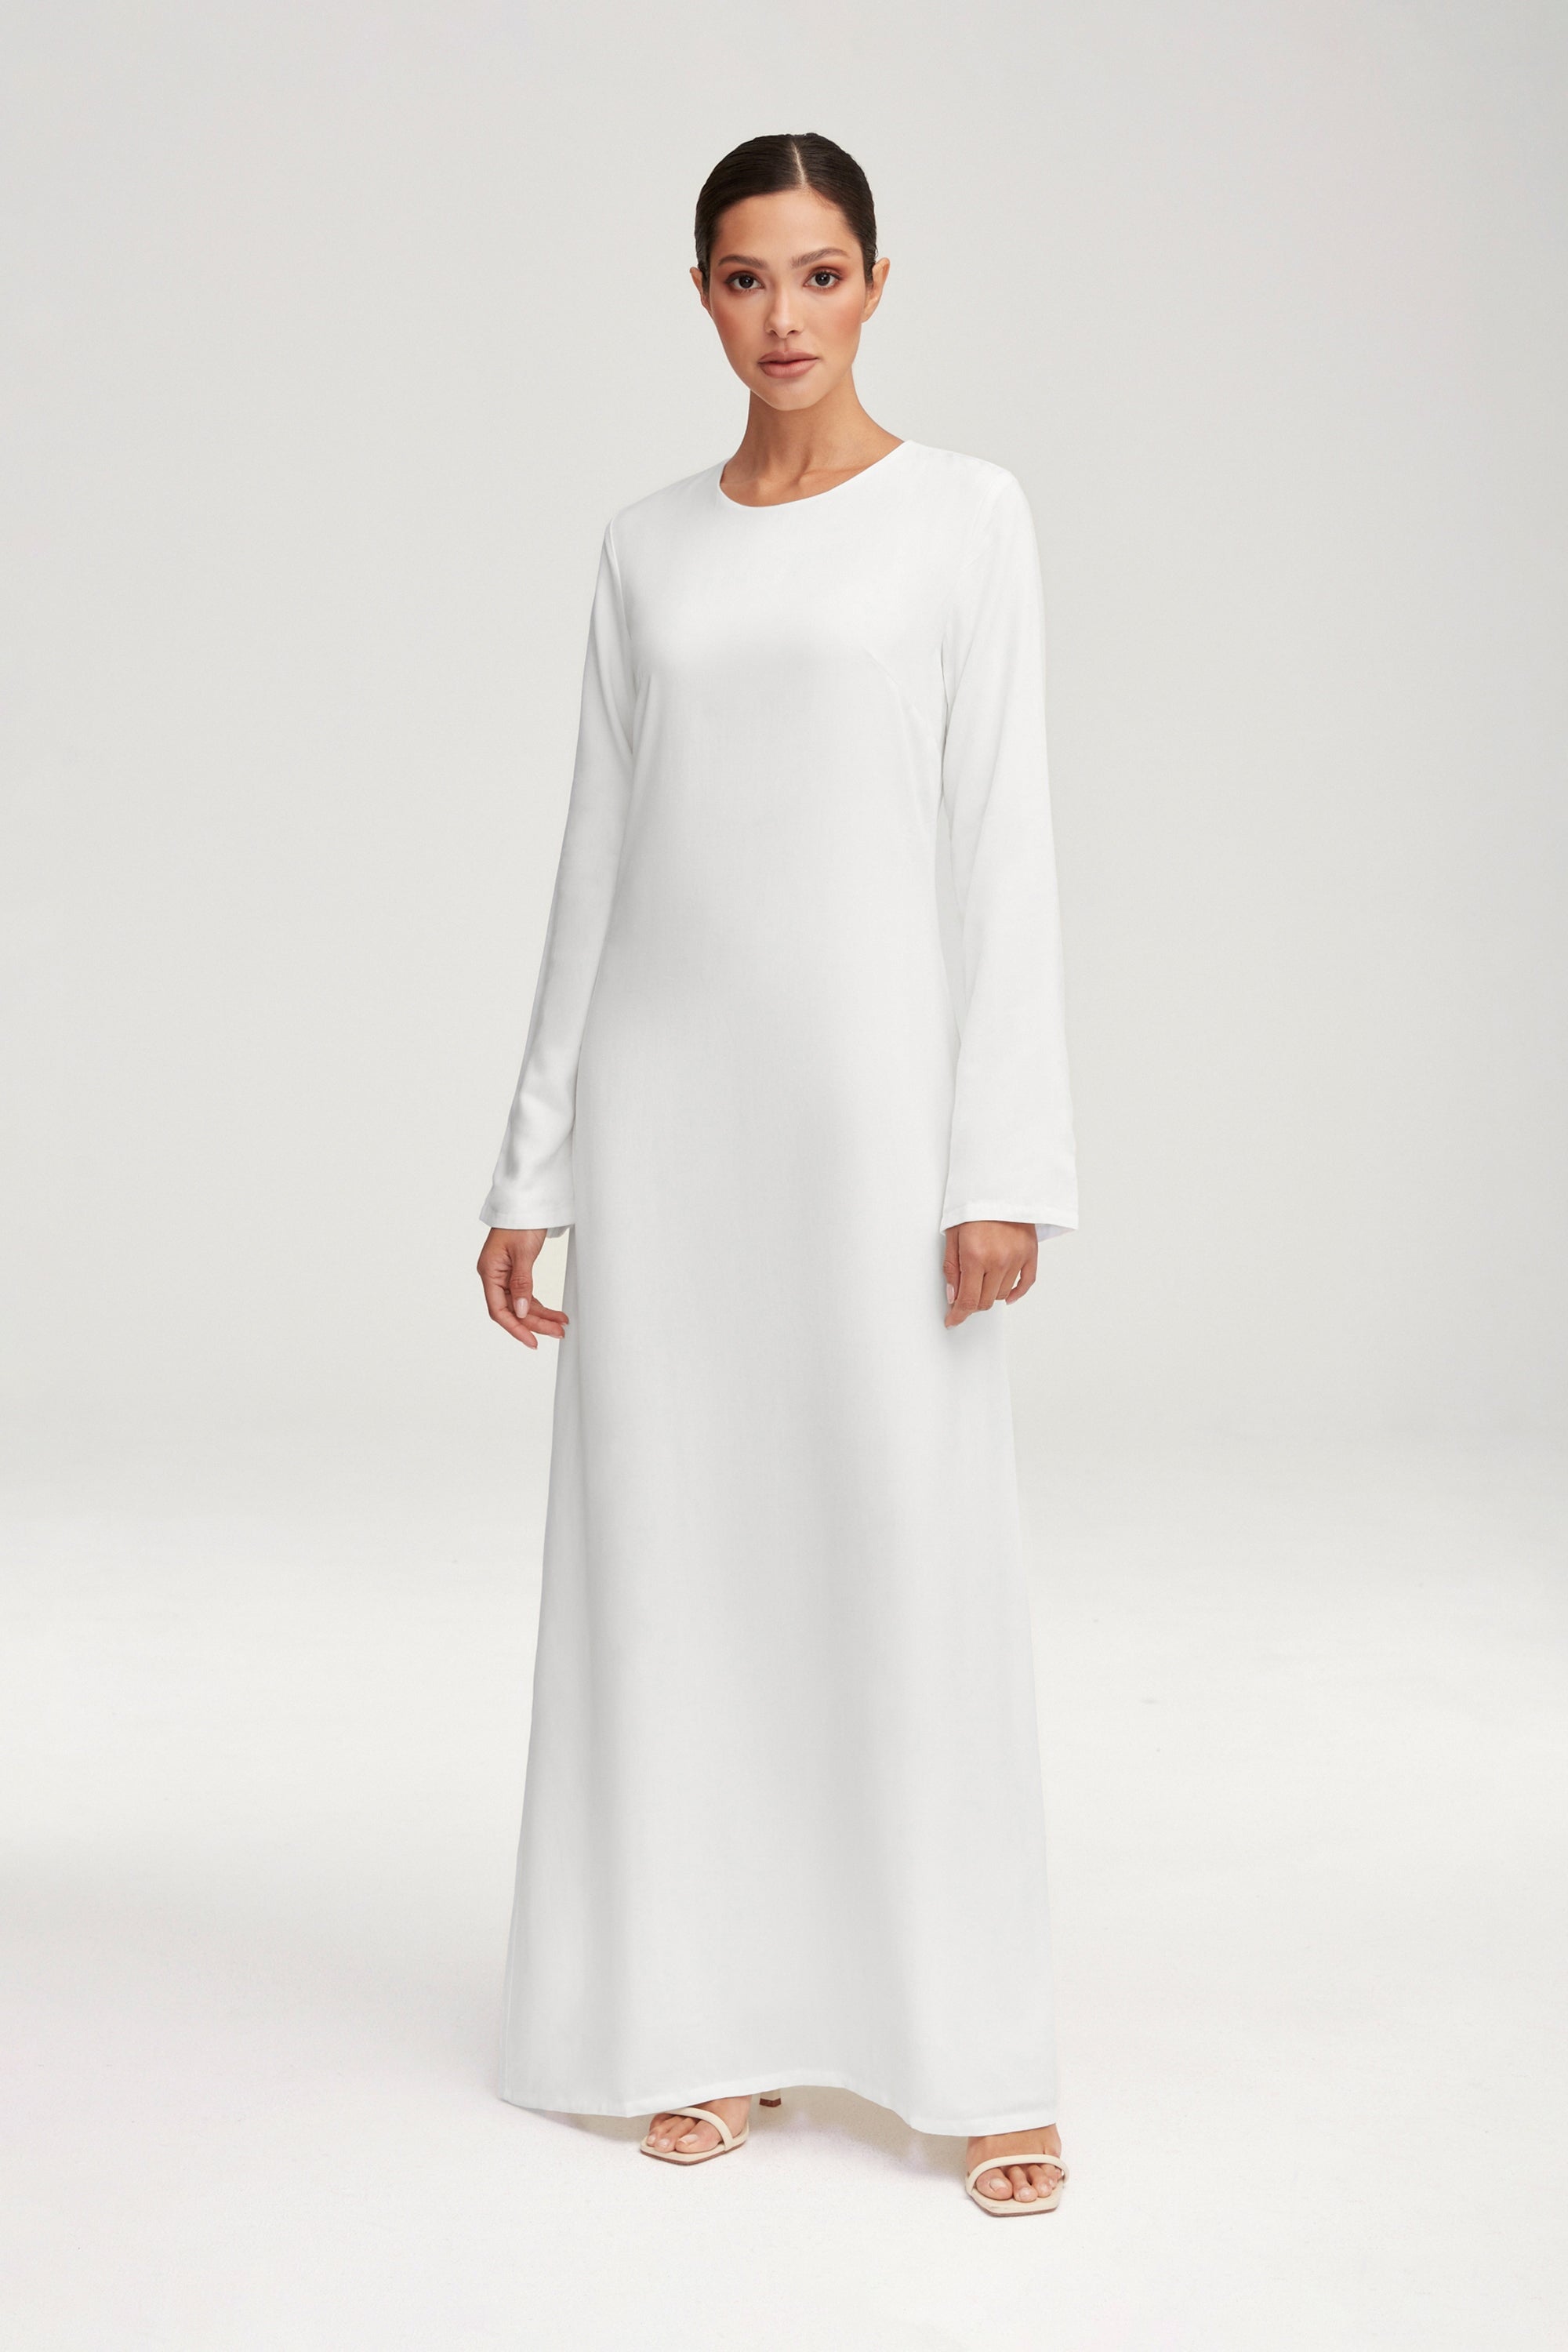 yinguo ladies white v neck long dress evening dress formal dress white xl -  Walmart.com